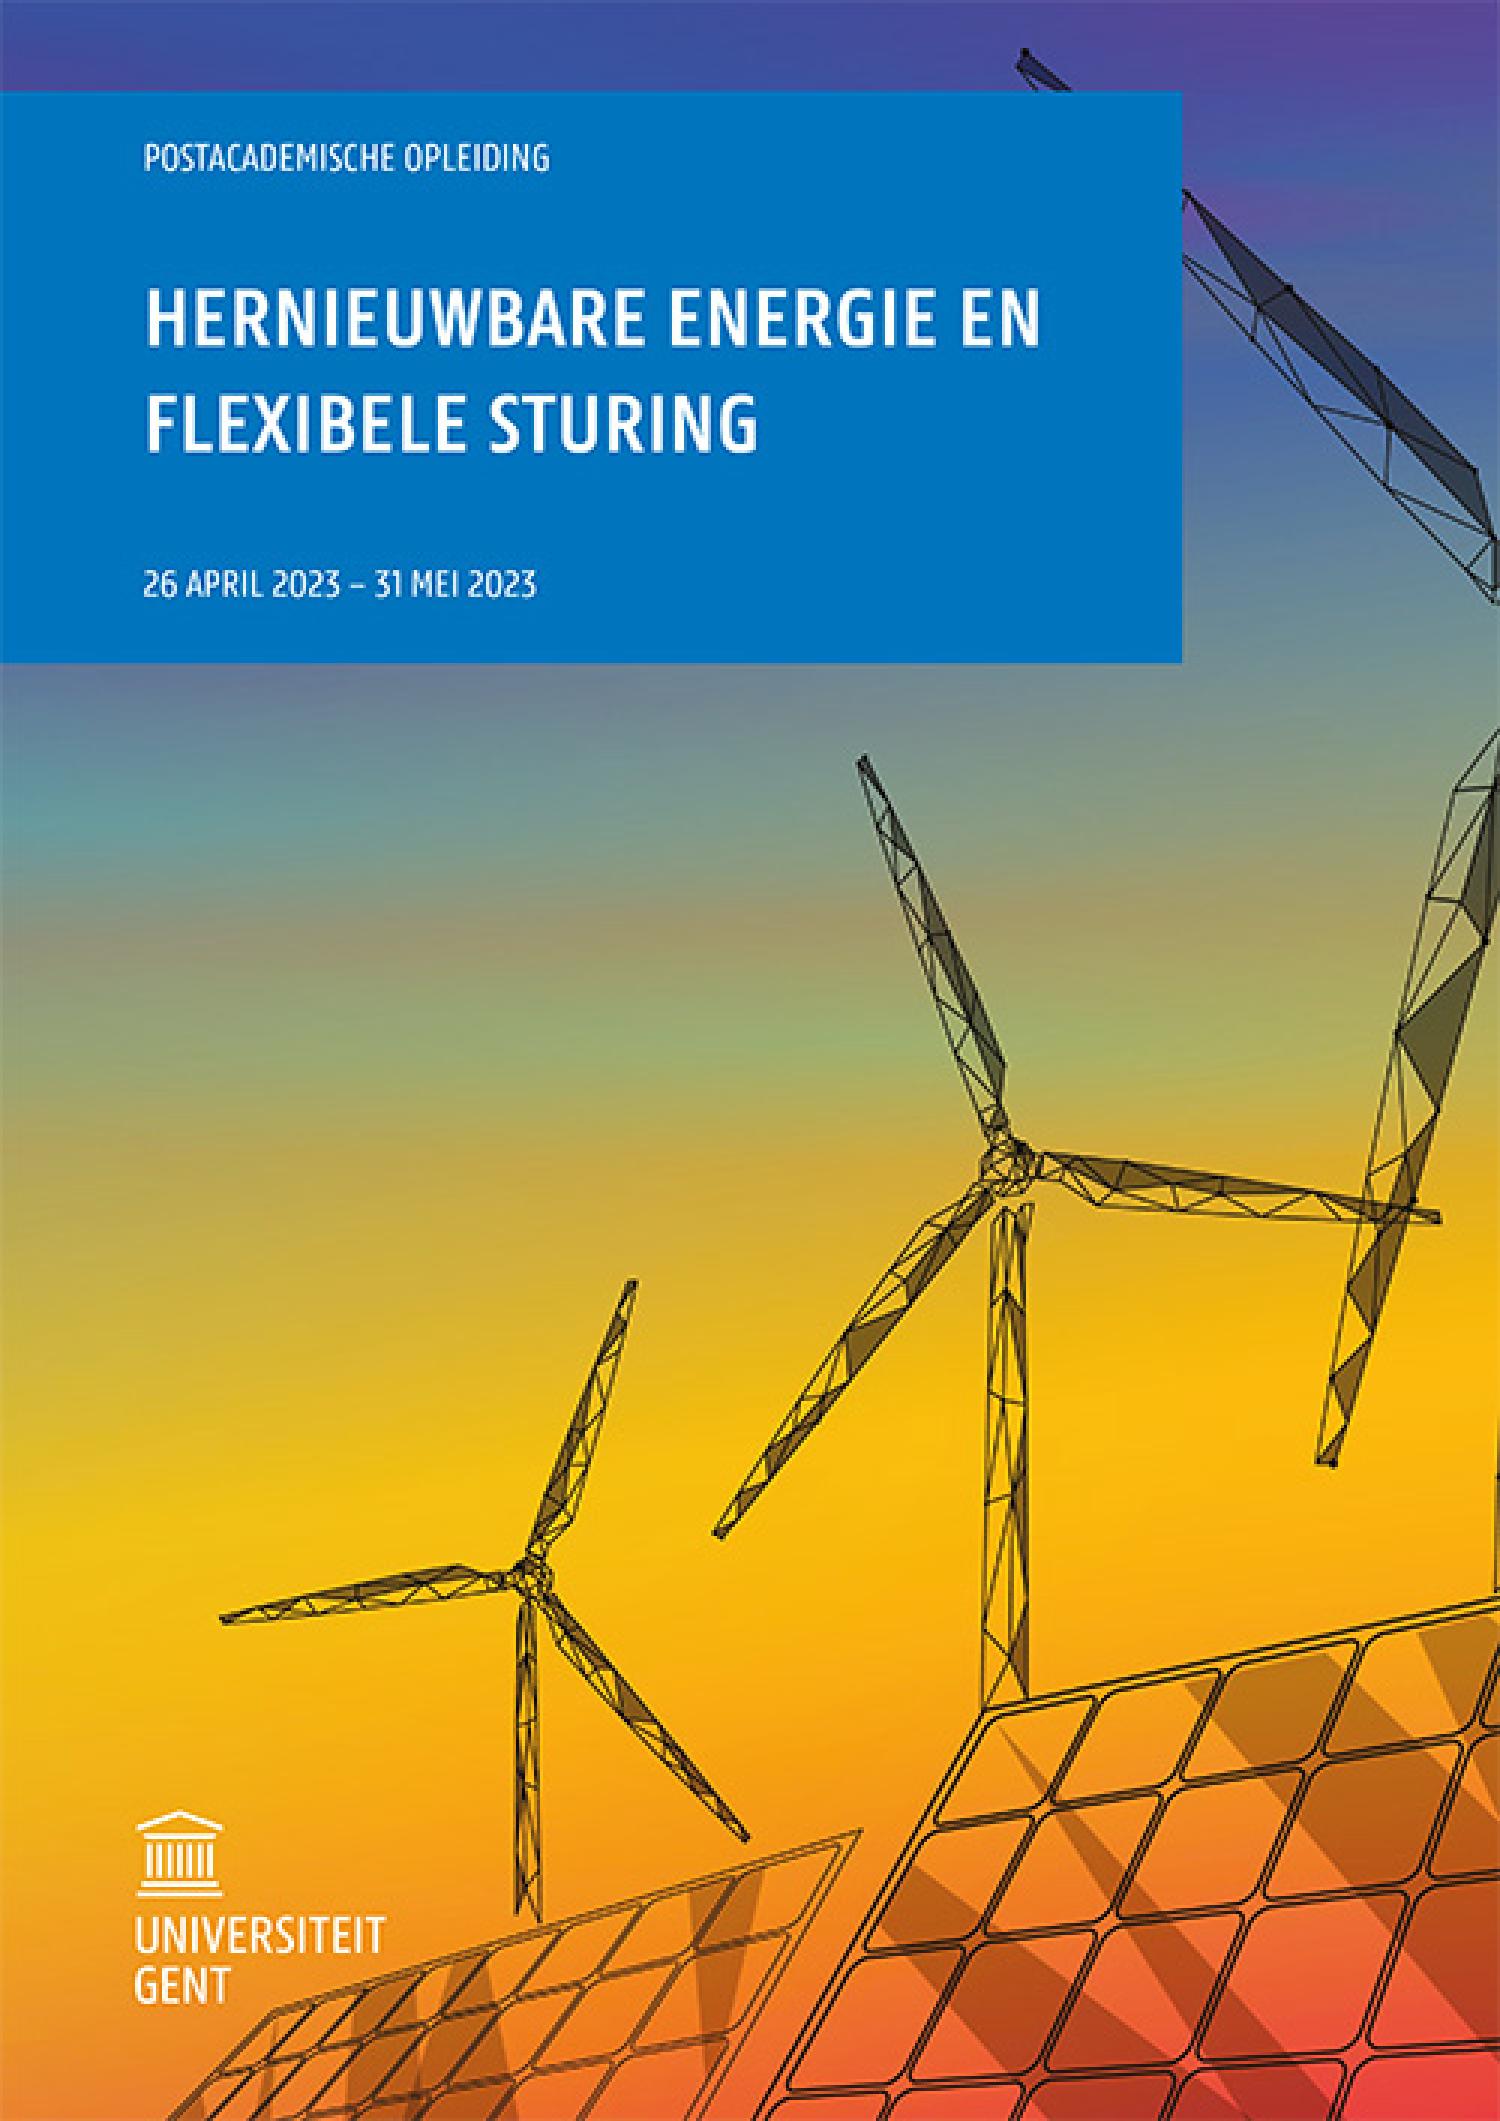 Hernieuwbare energie en flexibele sturing